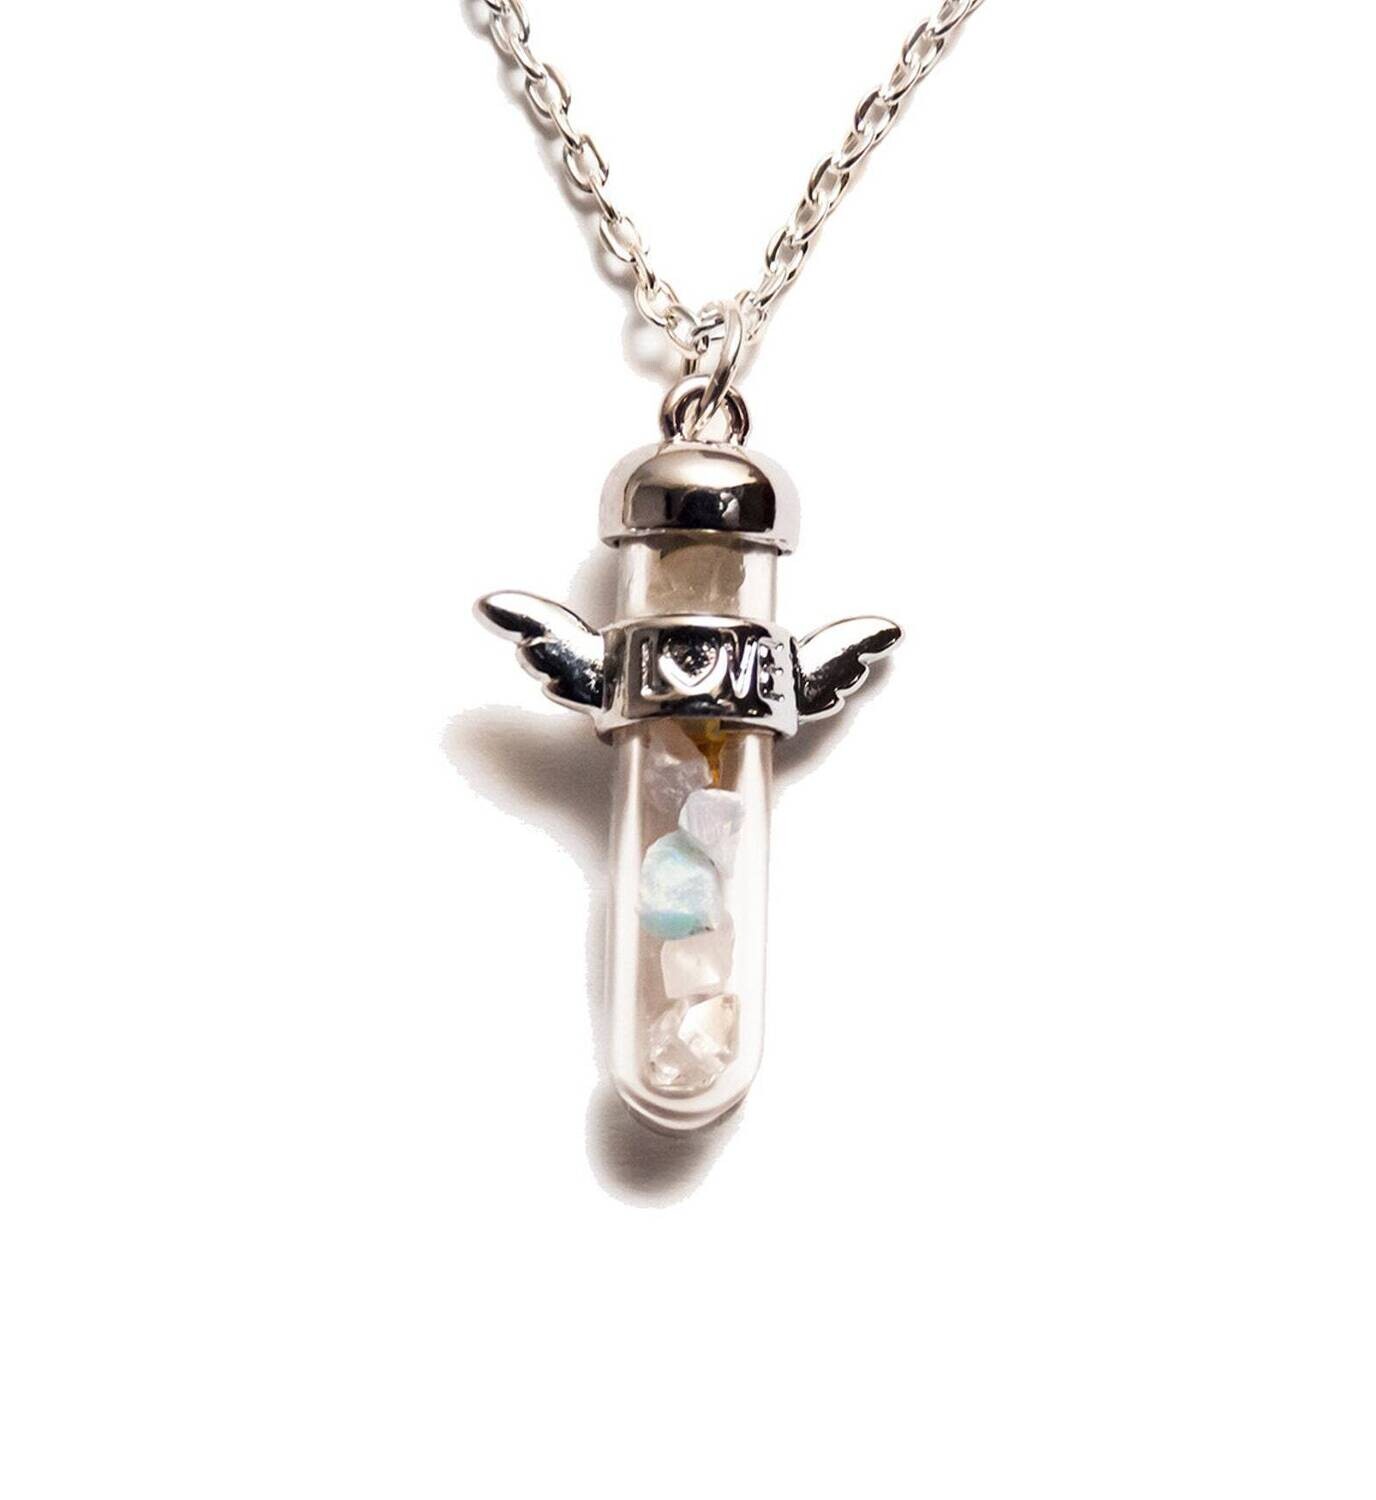 Amazing Archangel Chamuel Love Wing Guardian Angel Crystal Pendant = Unconditional Love - Relationships - Kunzite Rose Quartz